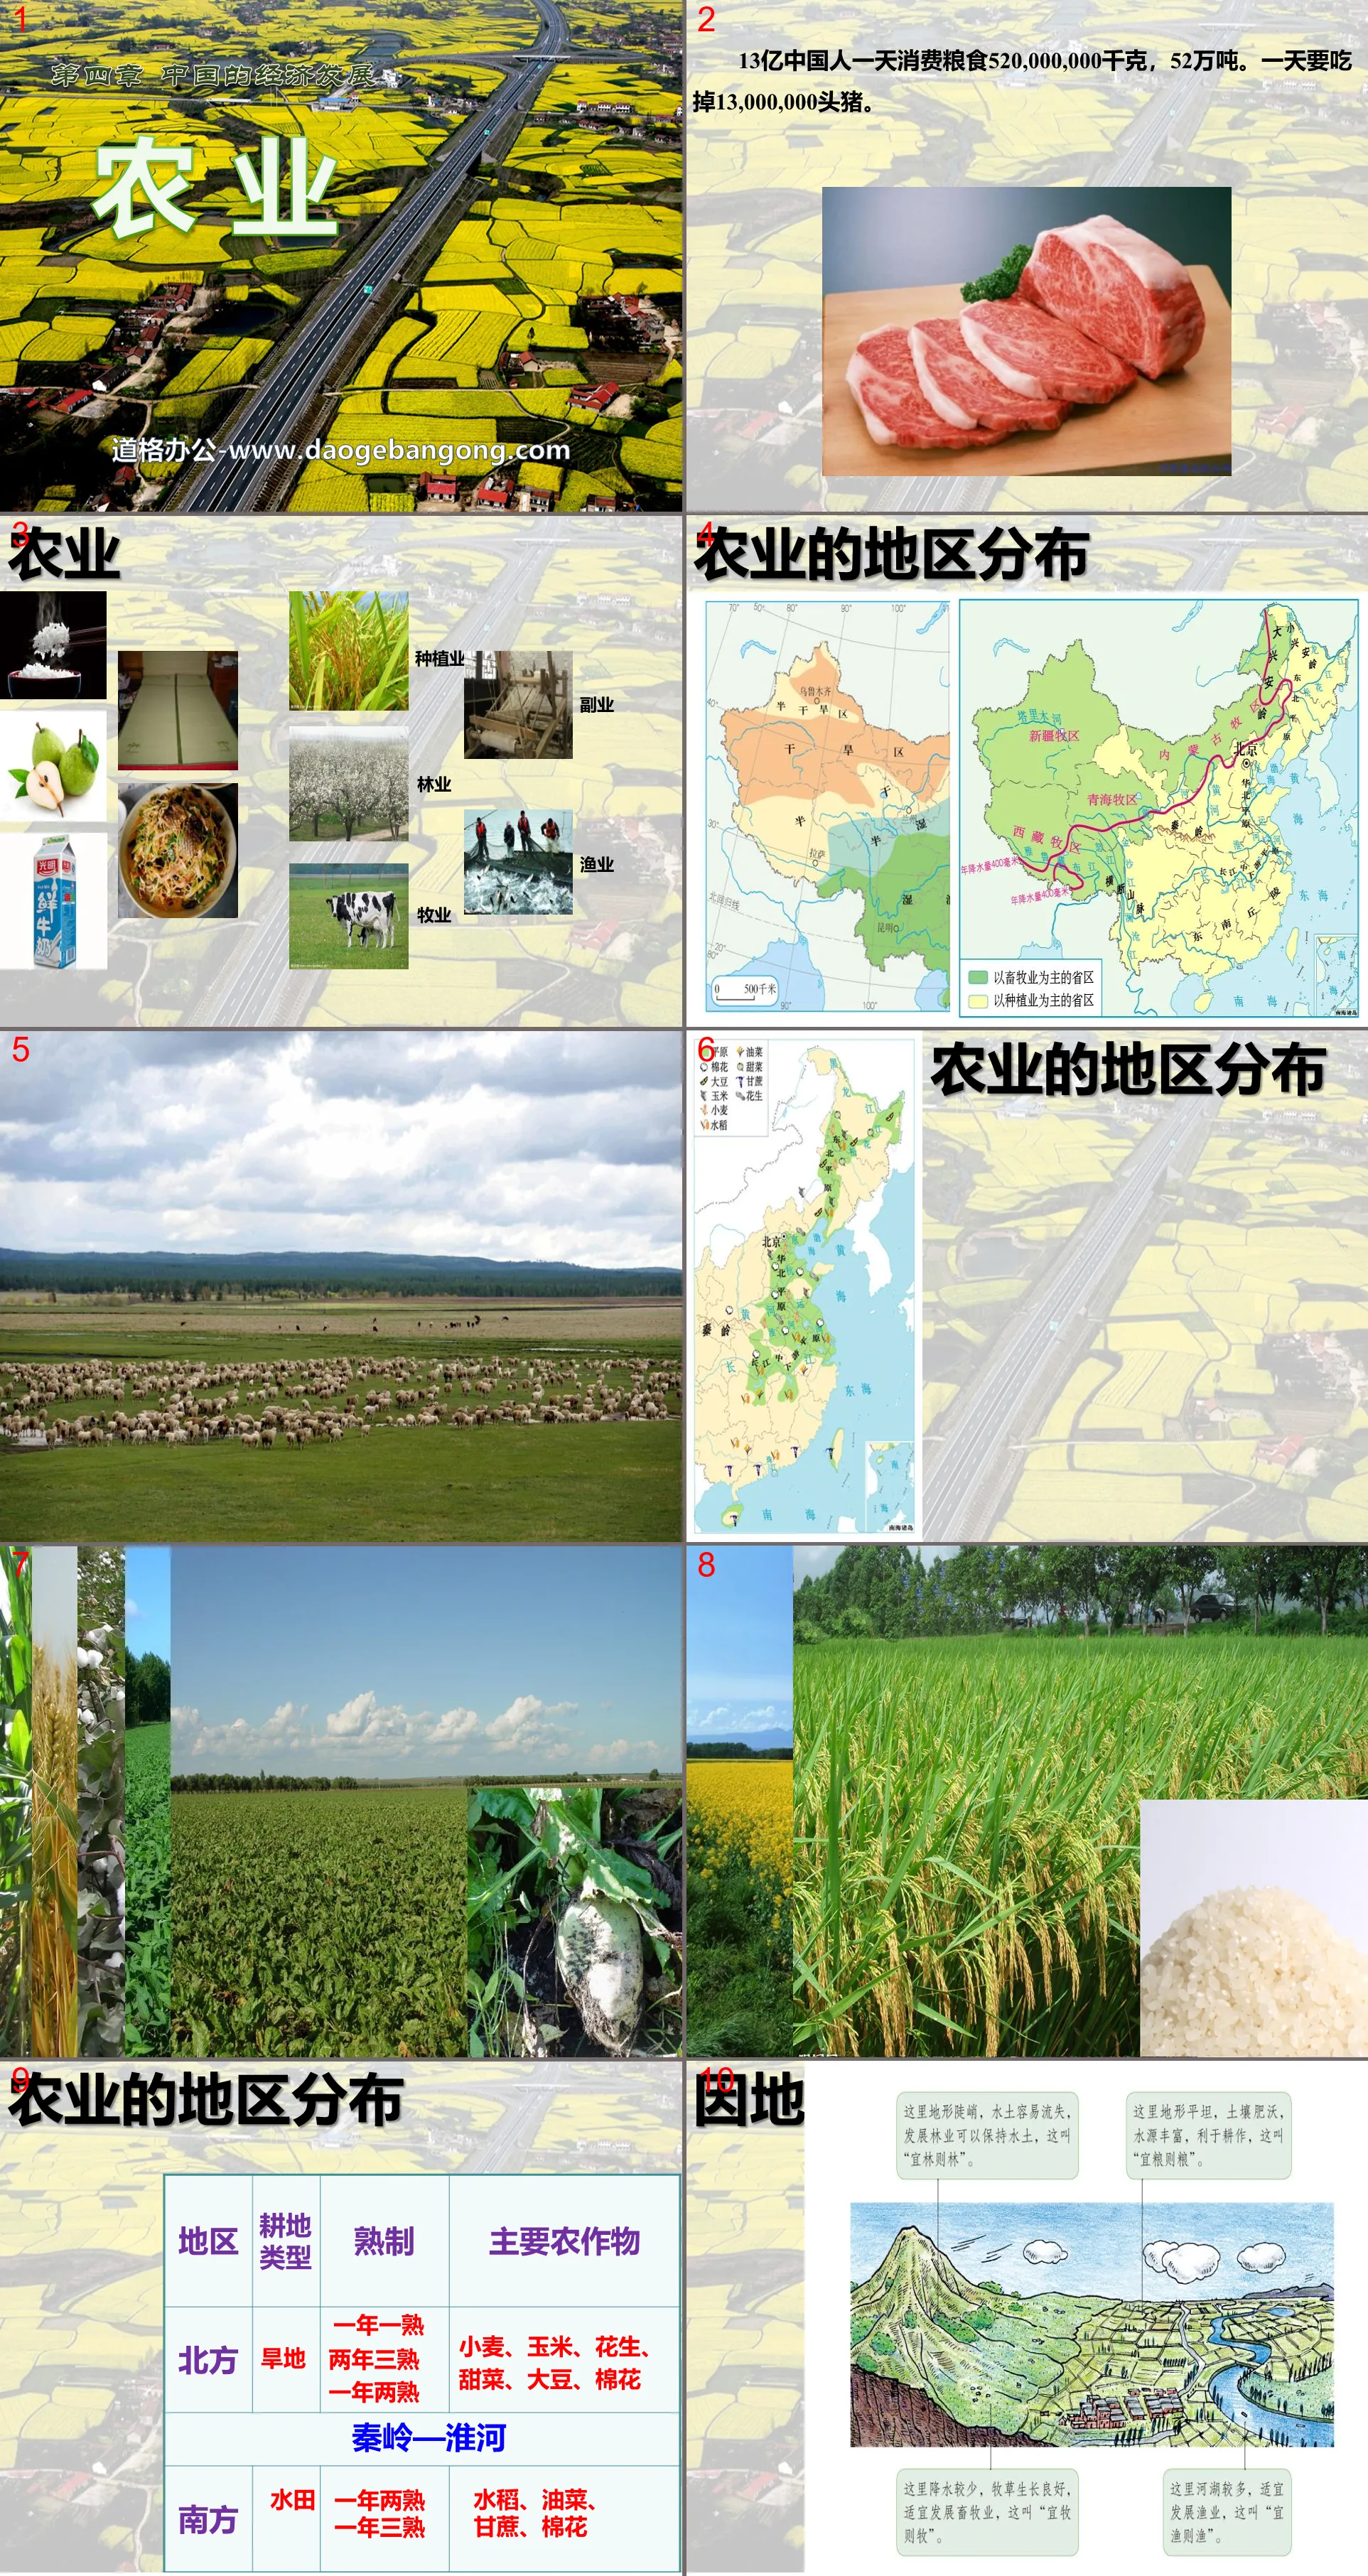 "Agriculture" China's Economic Development PPT Courseware 2